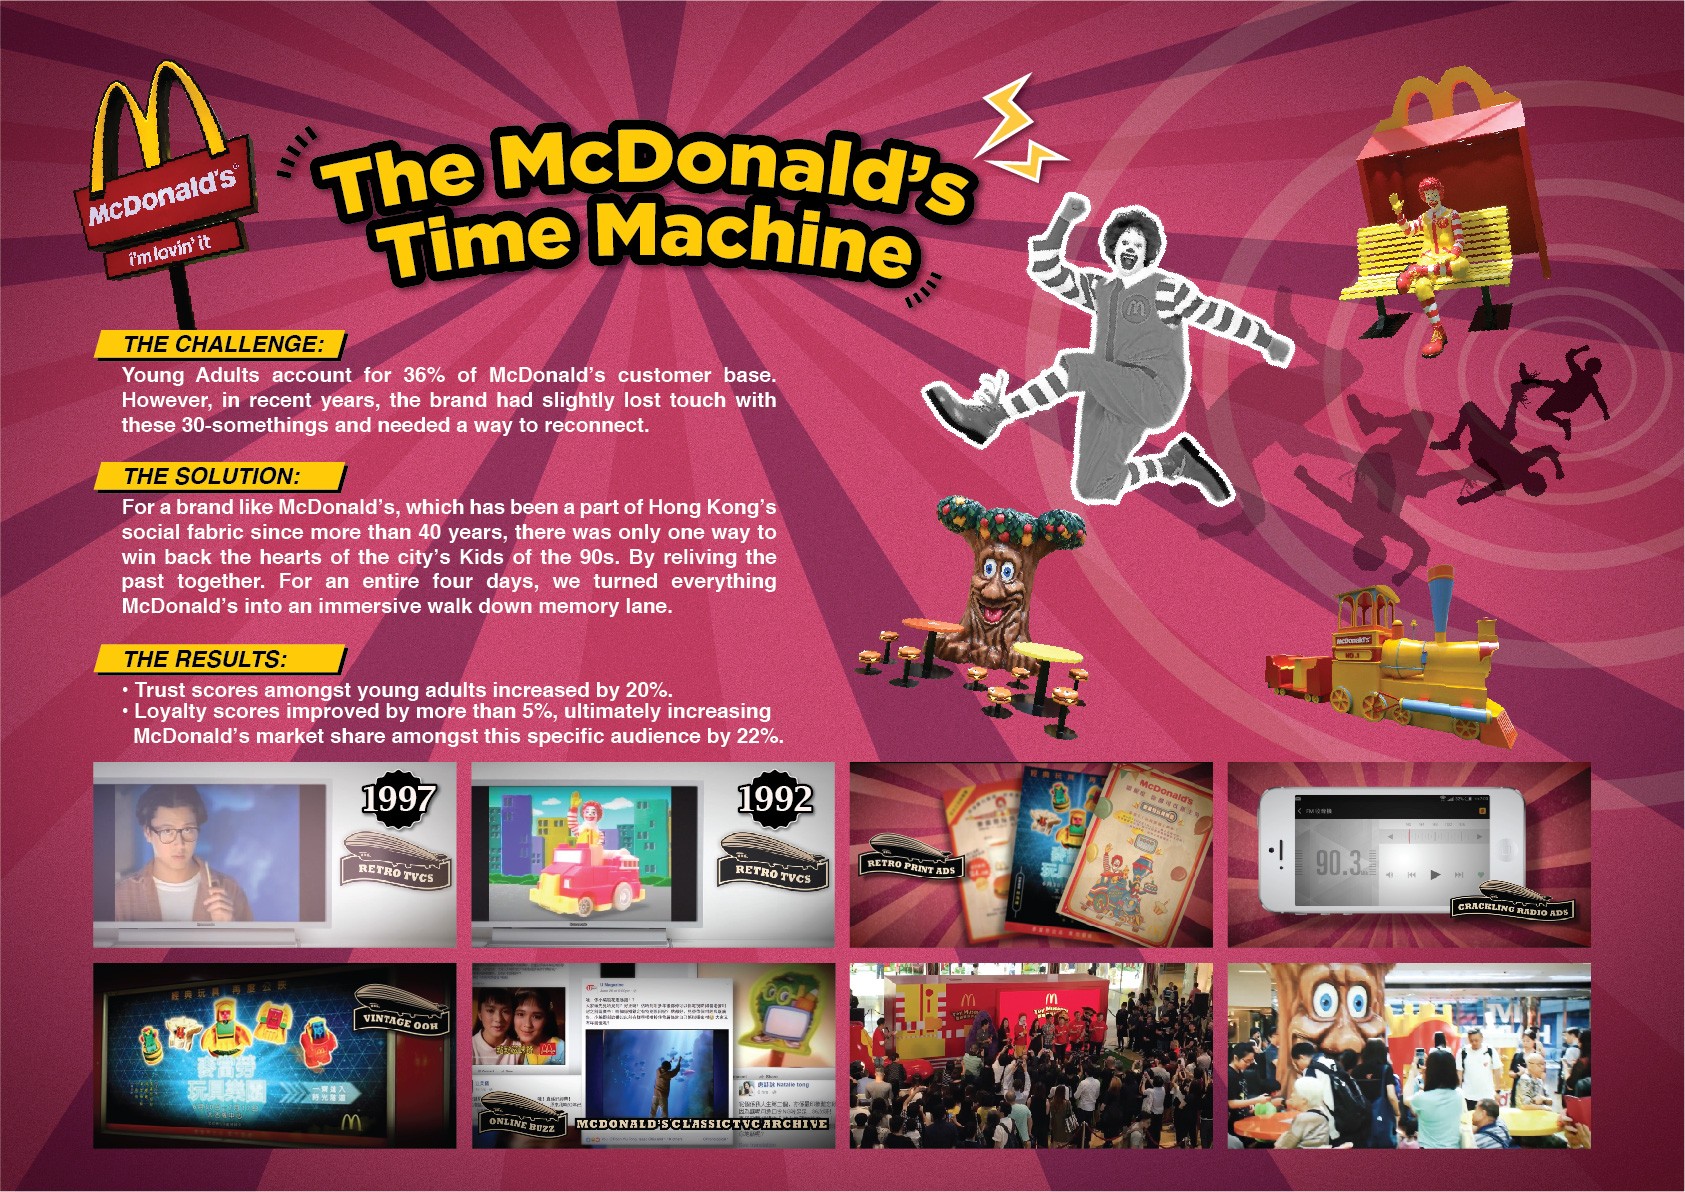 The McDonald's Time Machine